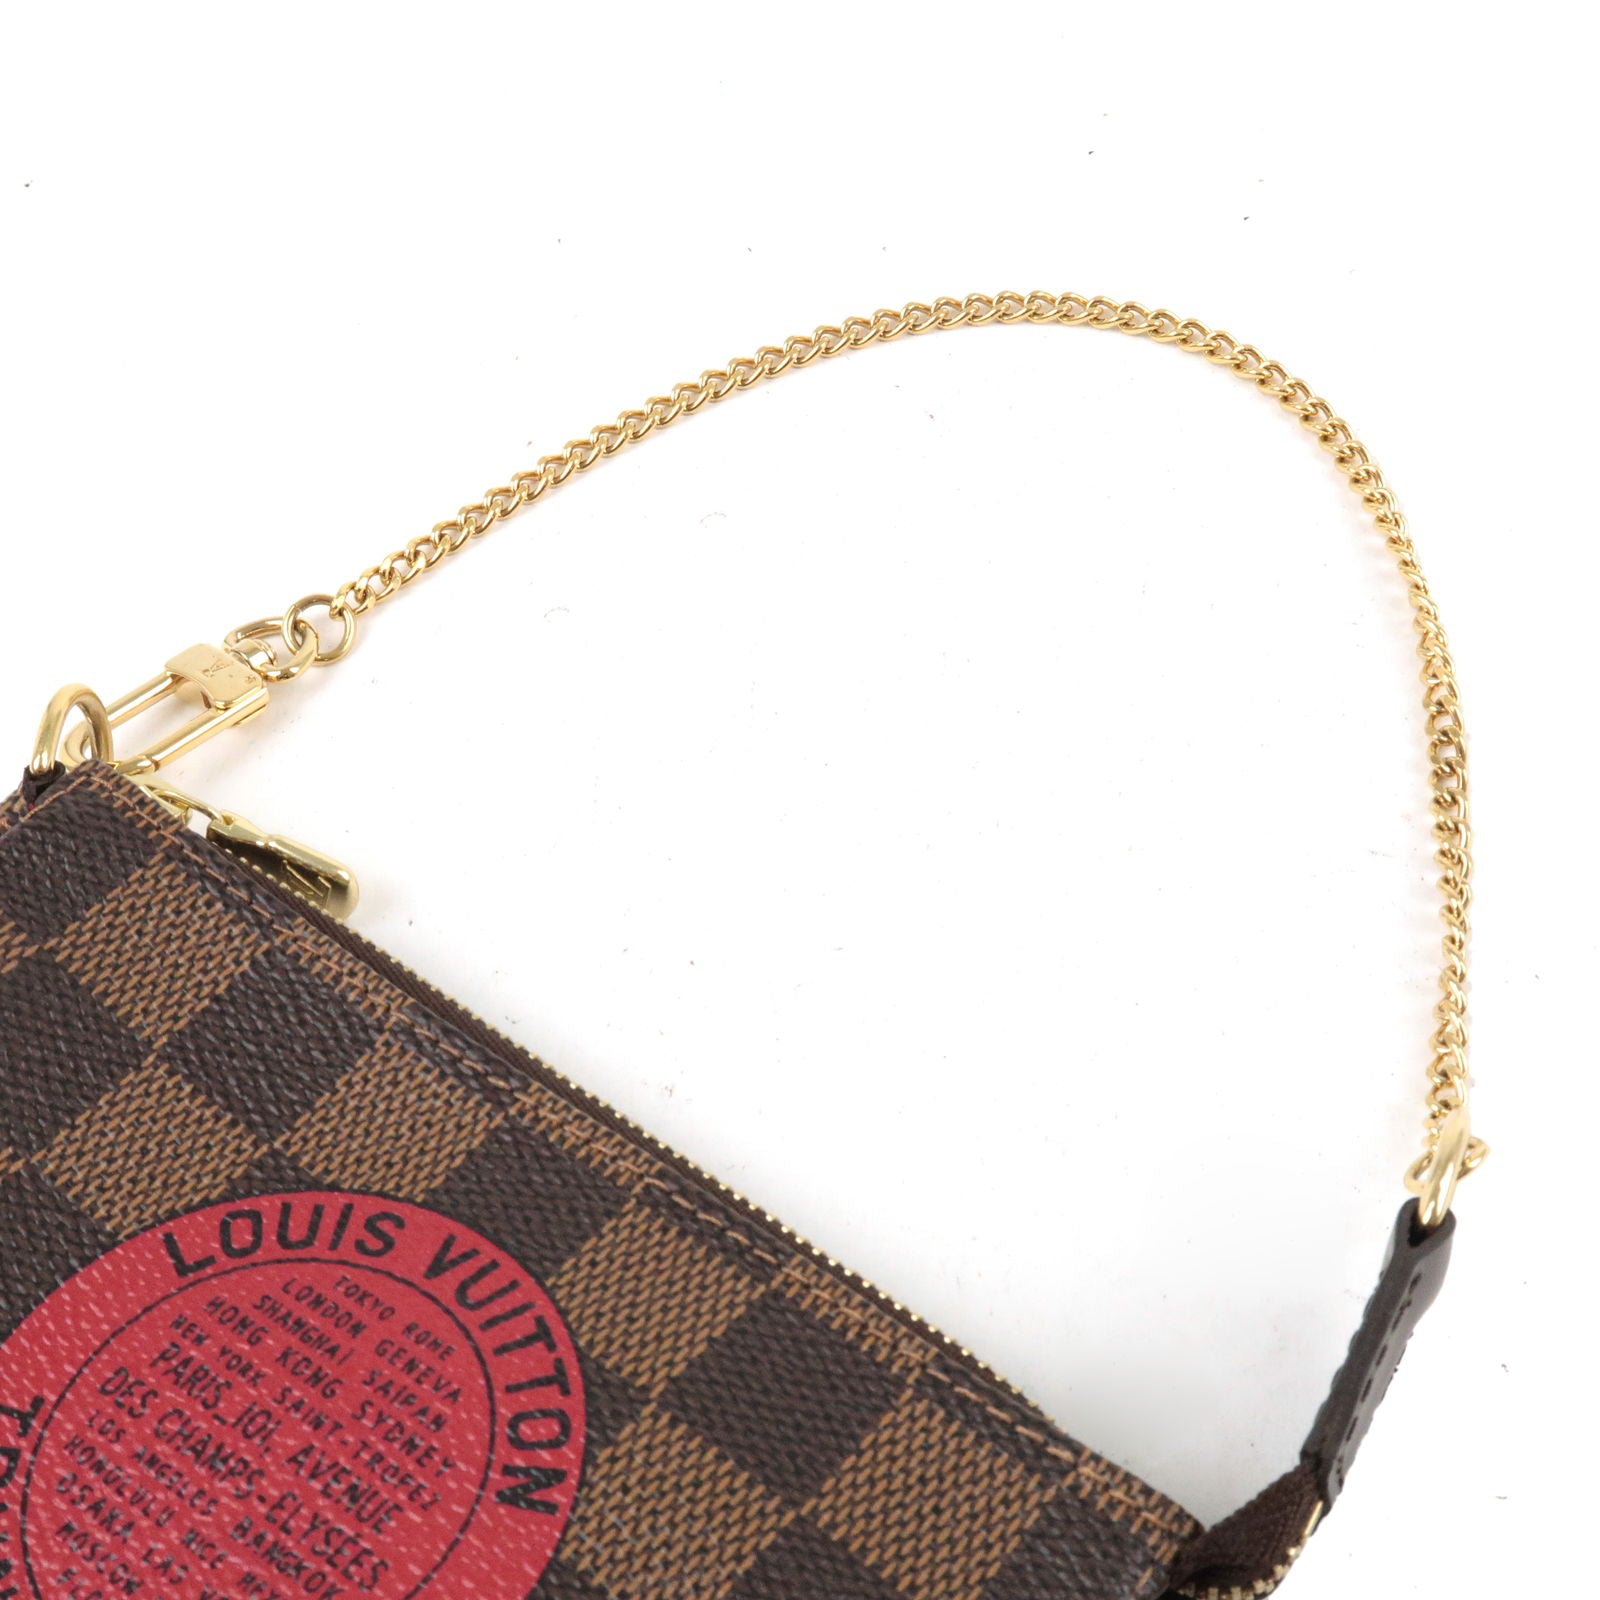 Louis Vuitton Pre-Owned Black Pochette Segur Epi Leather Shoulder Bag, Best Price and Reviews